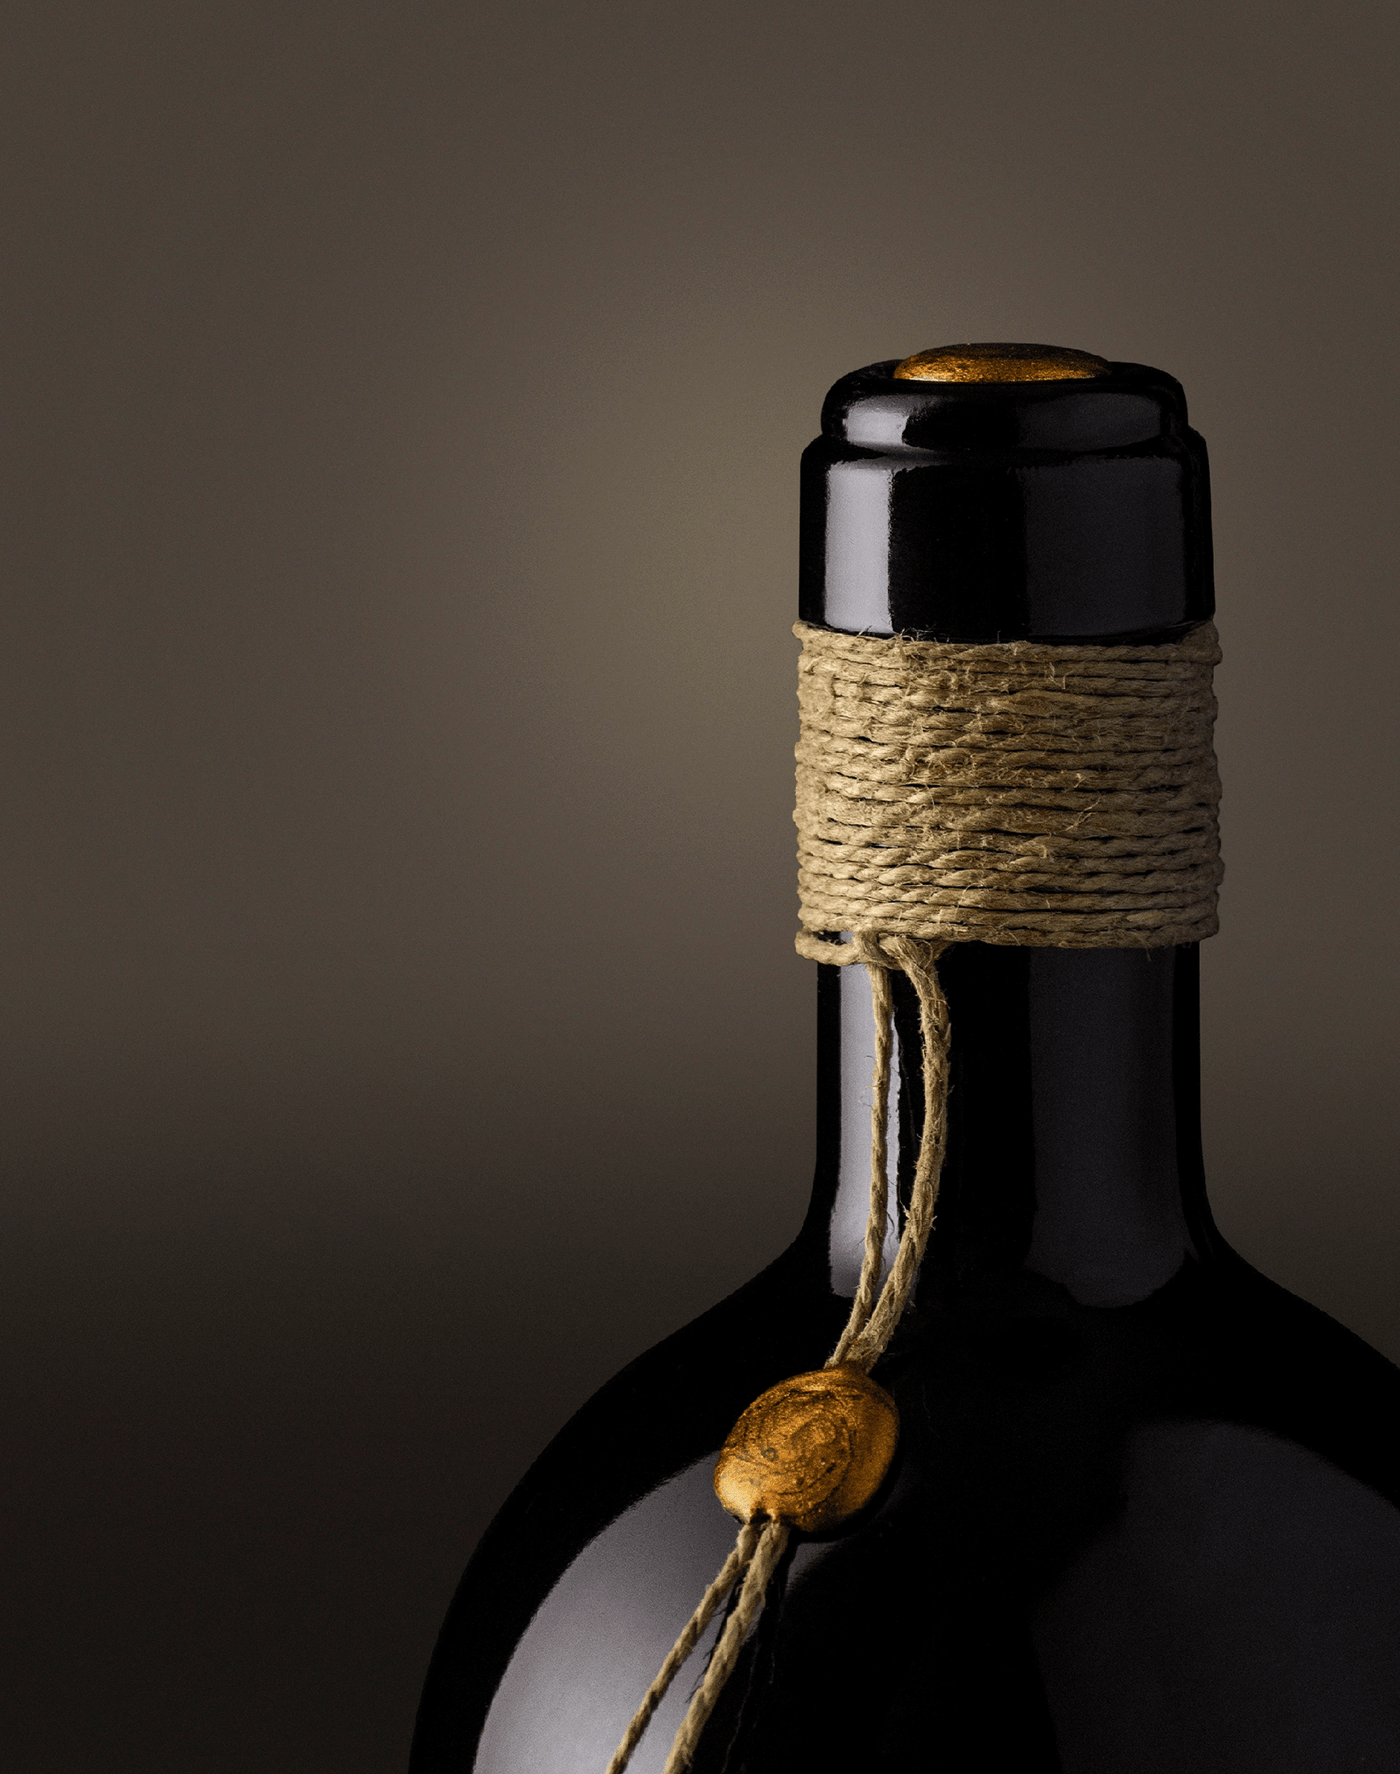 bottle design etiqueta Label package Packaging packaging design product vino wine